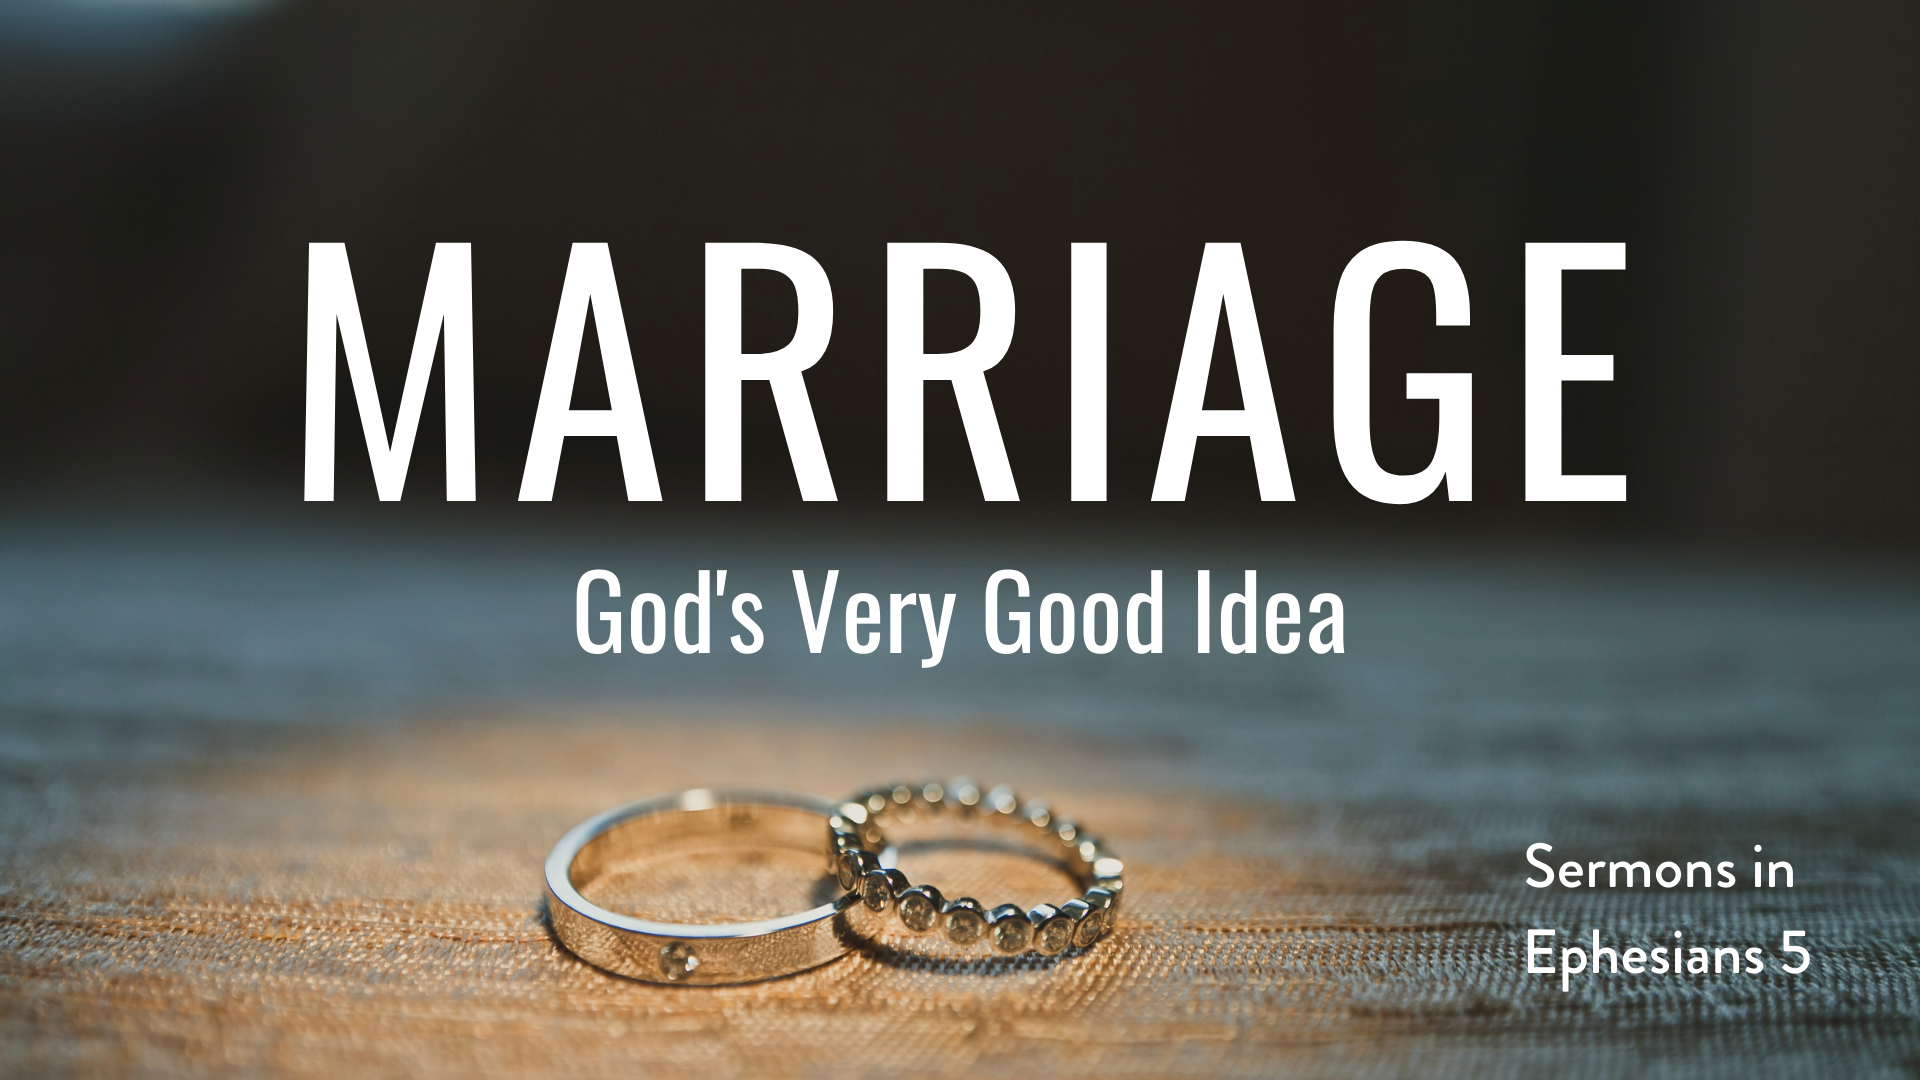 Biblical Marriage: Heart